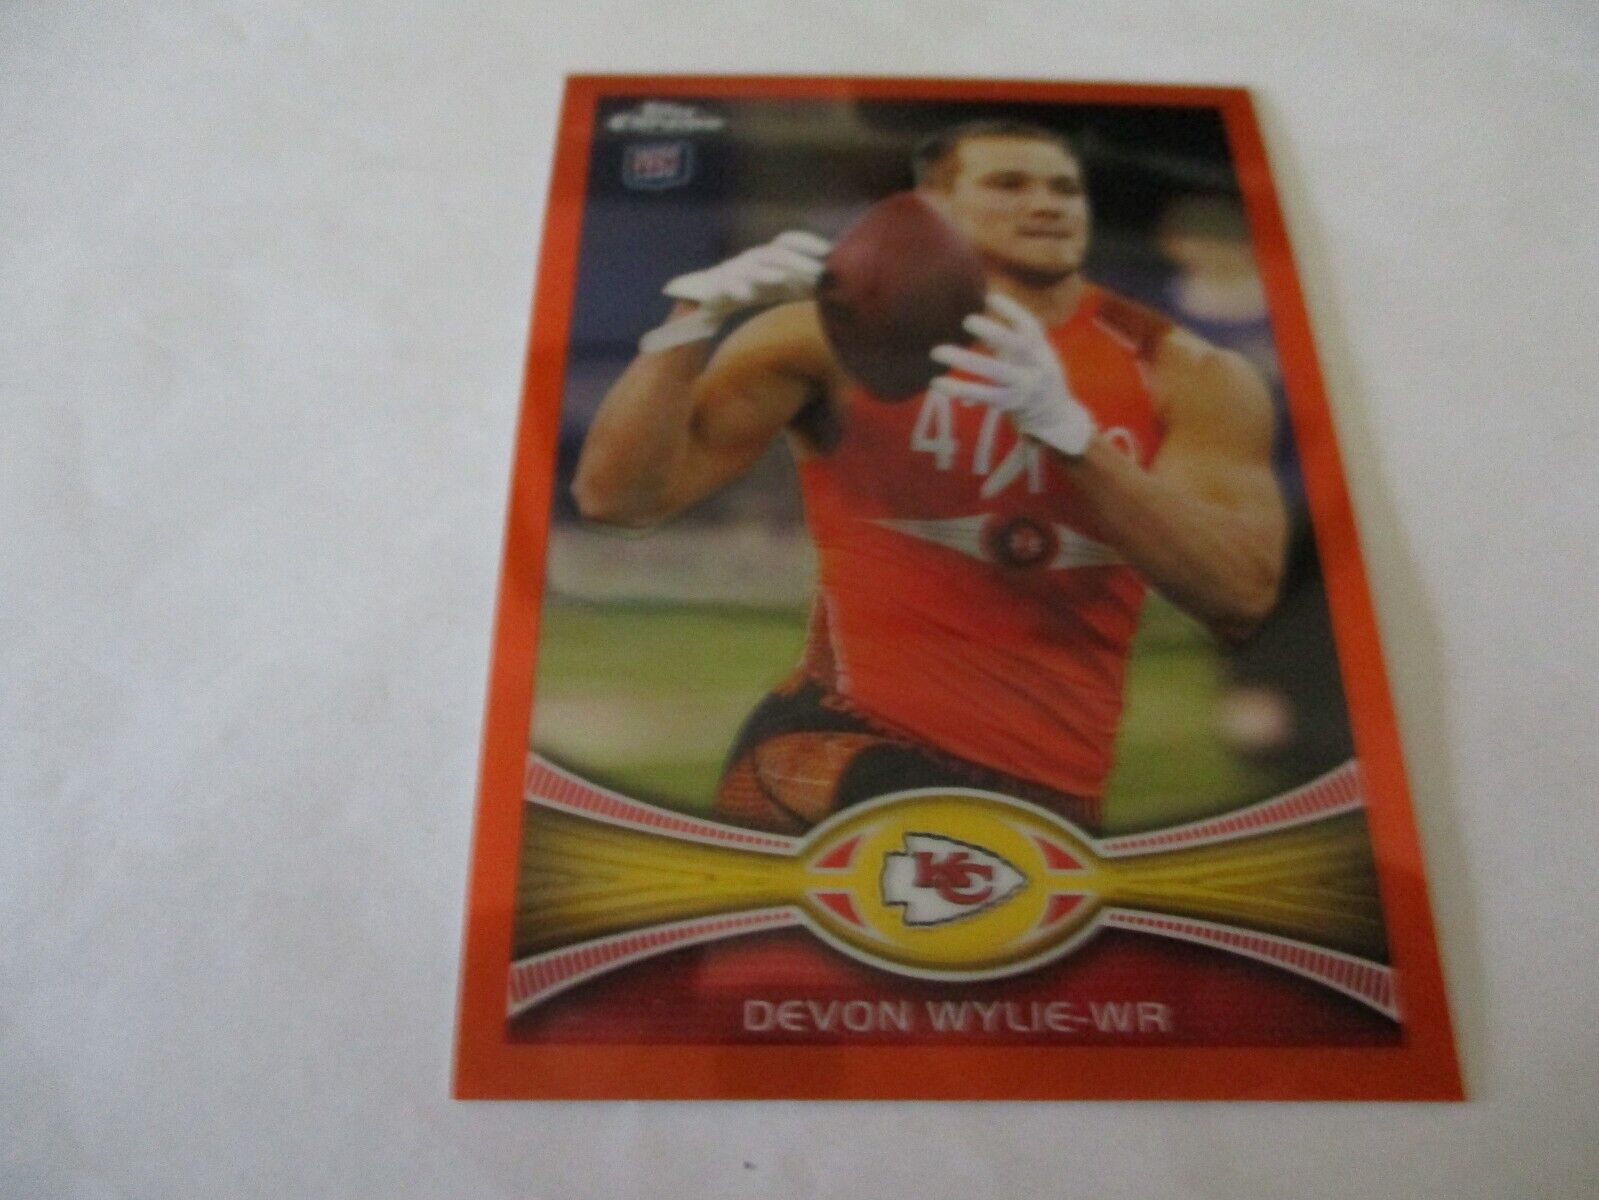 2012 Topps Chrome Football Orange Refractor Rookie DeVon Wylie Card #118. rookie card picture